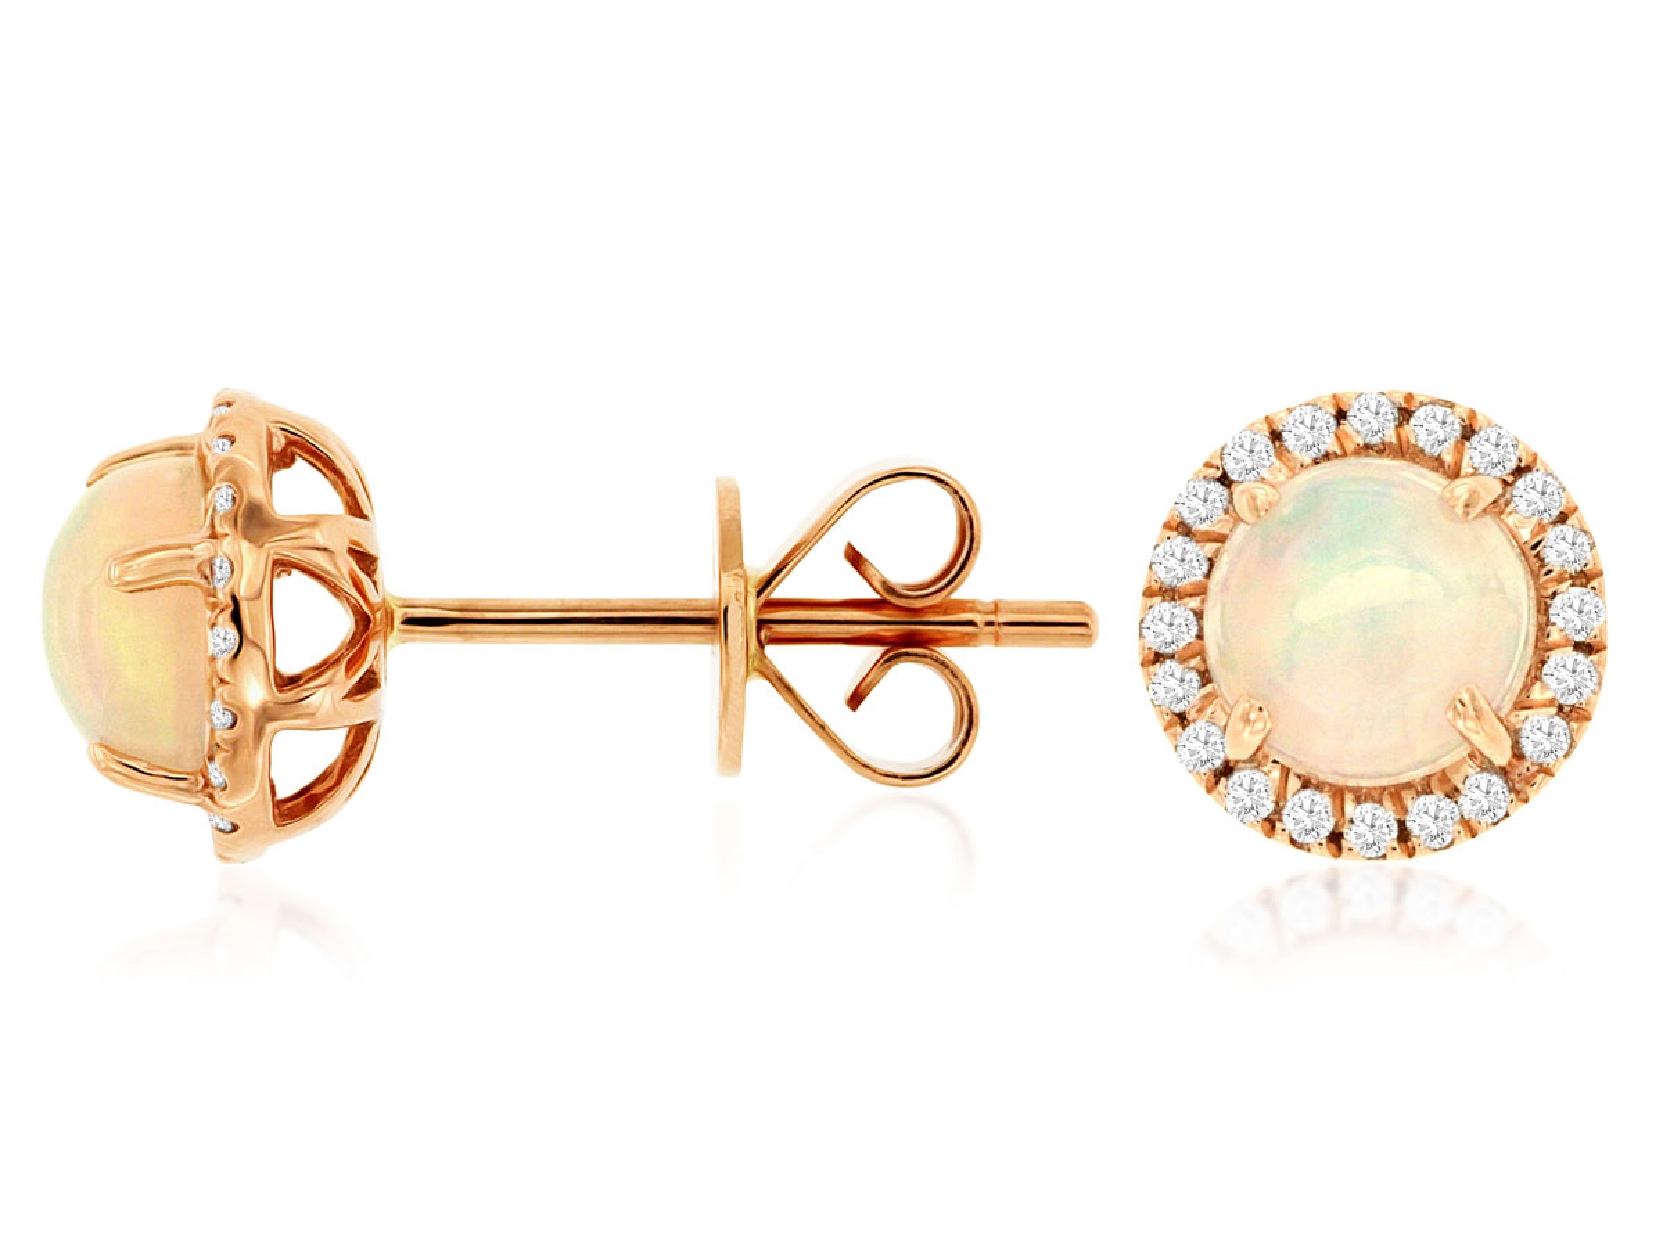 14K Rose Gold Opal and Diamond Halo Stud Earrings 
.16 CTTW DIAMOND 
1.00CTTW OPAL